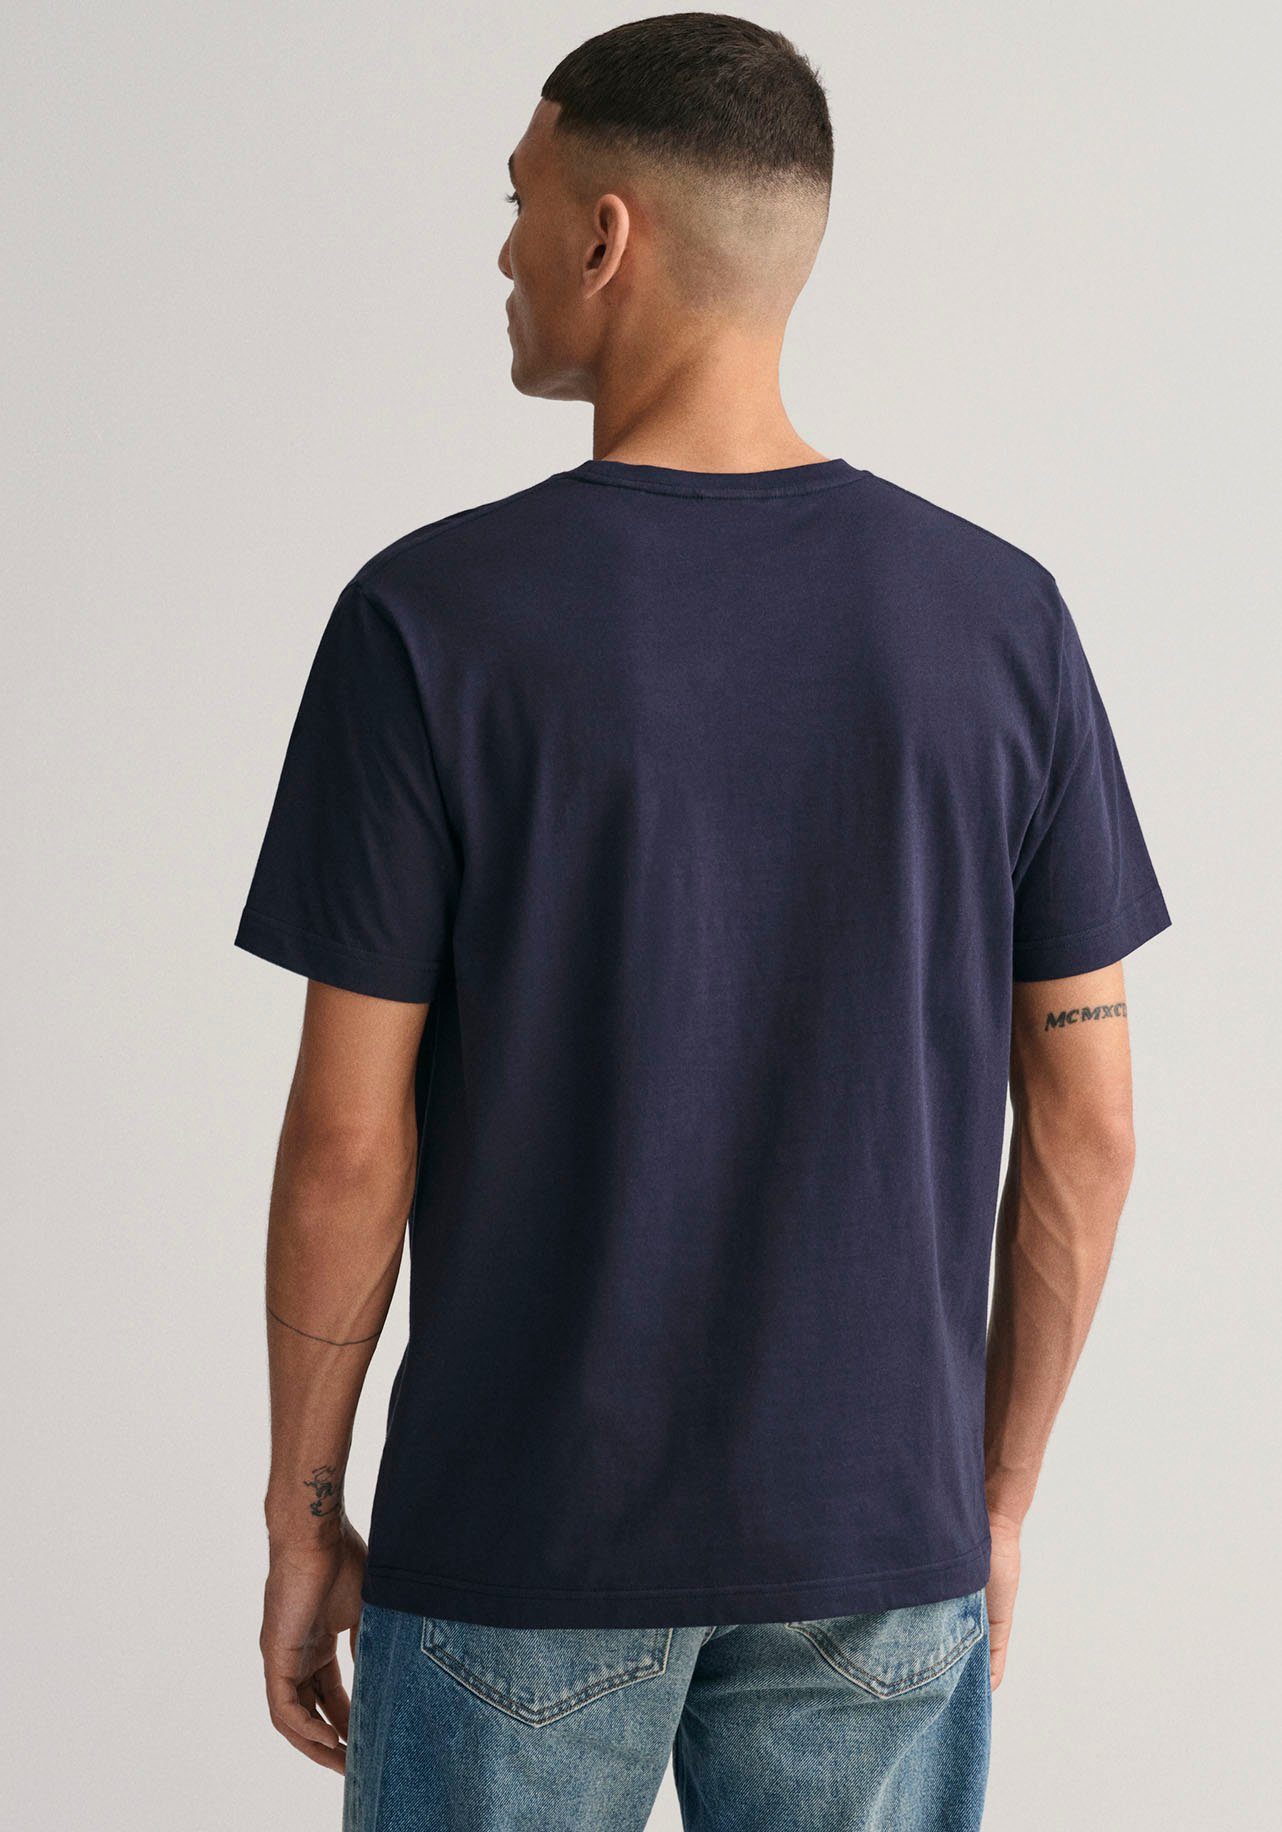 evening EMB dem T-SHIRT 1980er-Jahren REG ARCHIVE T-Shirt von SS Gant Archiv den aus SHIELD inspiriert blue